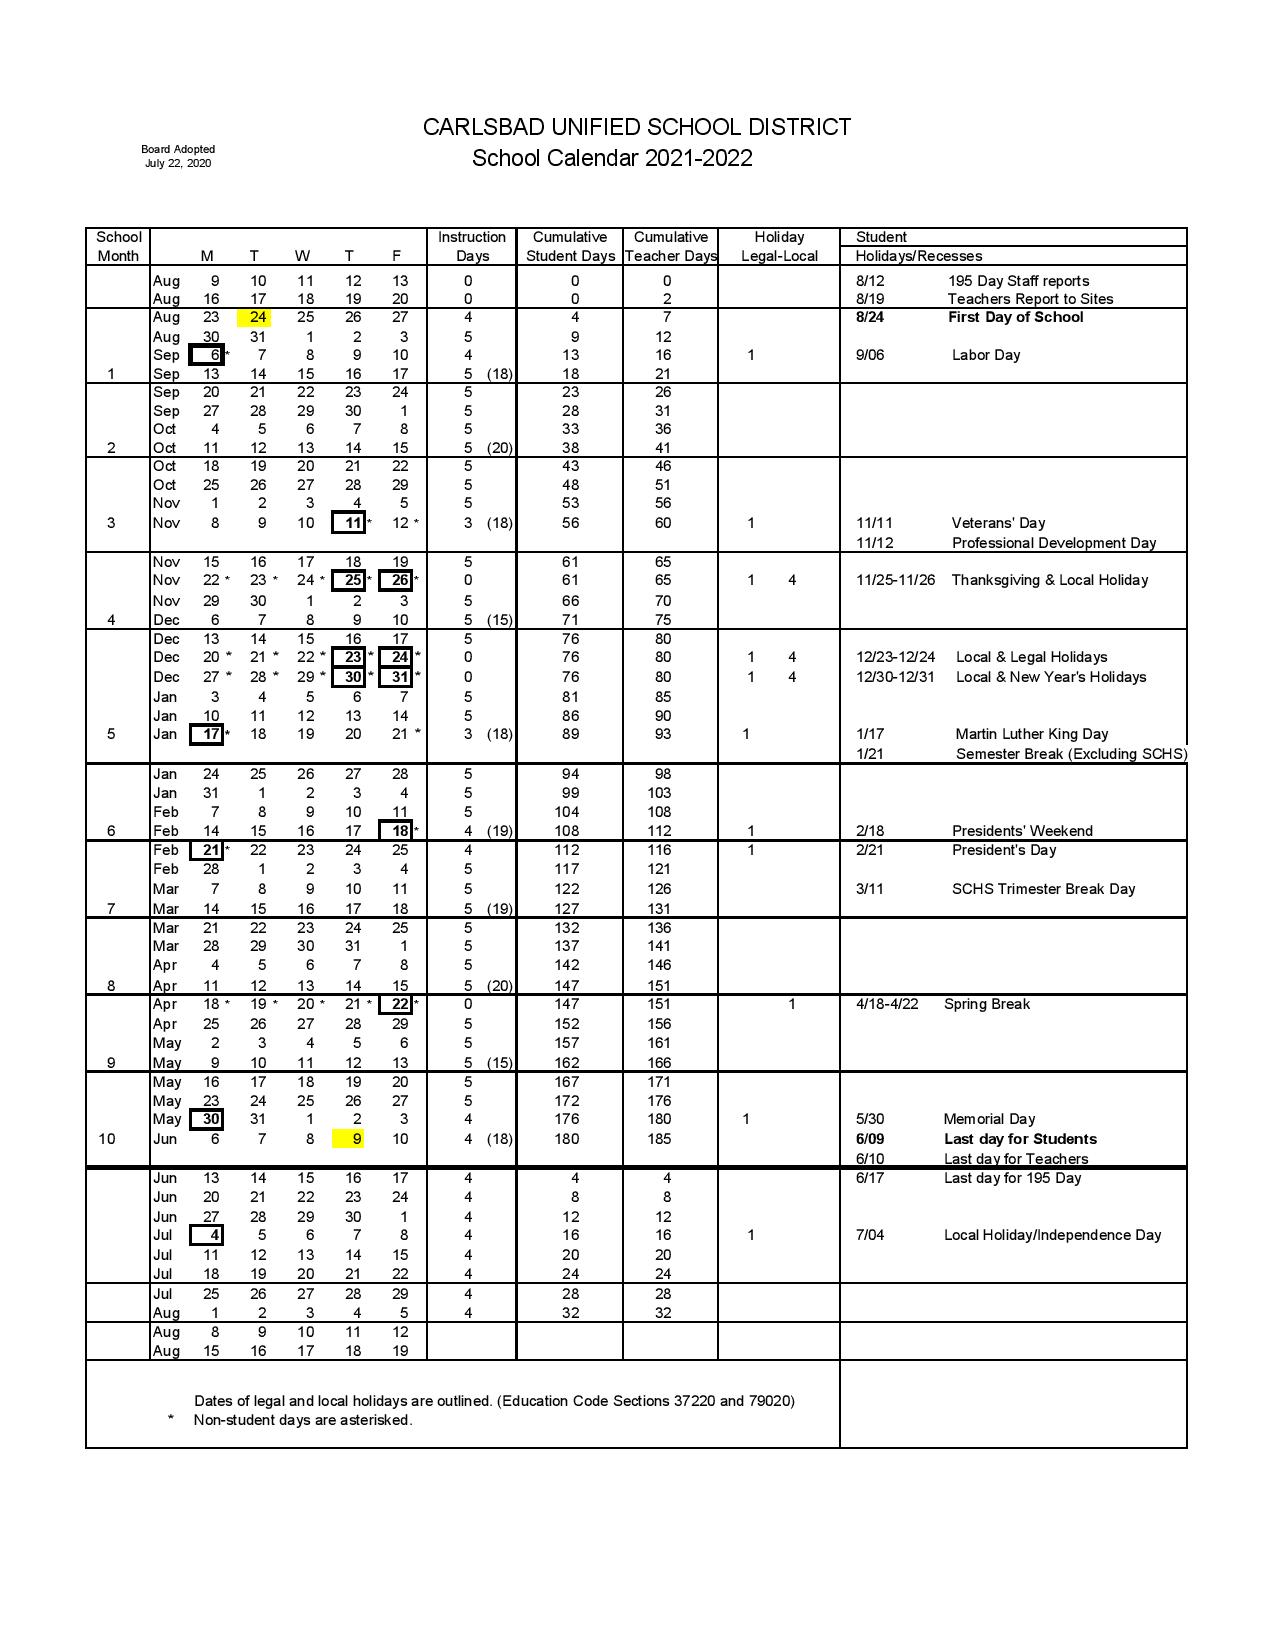 Carlsbad Unified School District Calendar 20212022